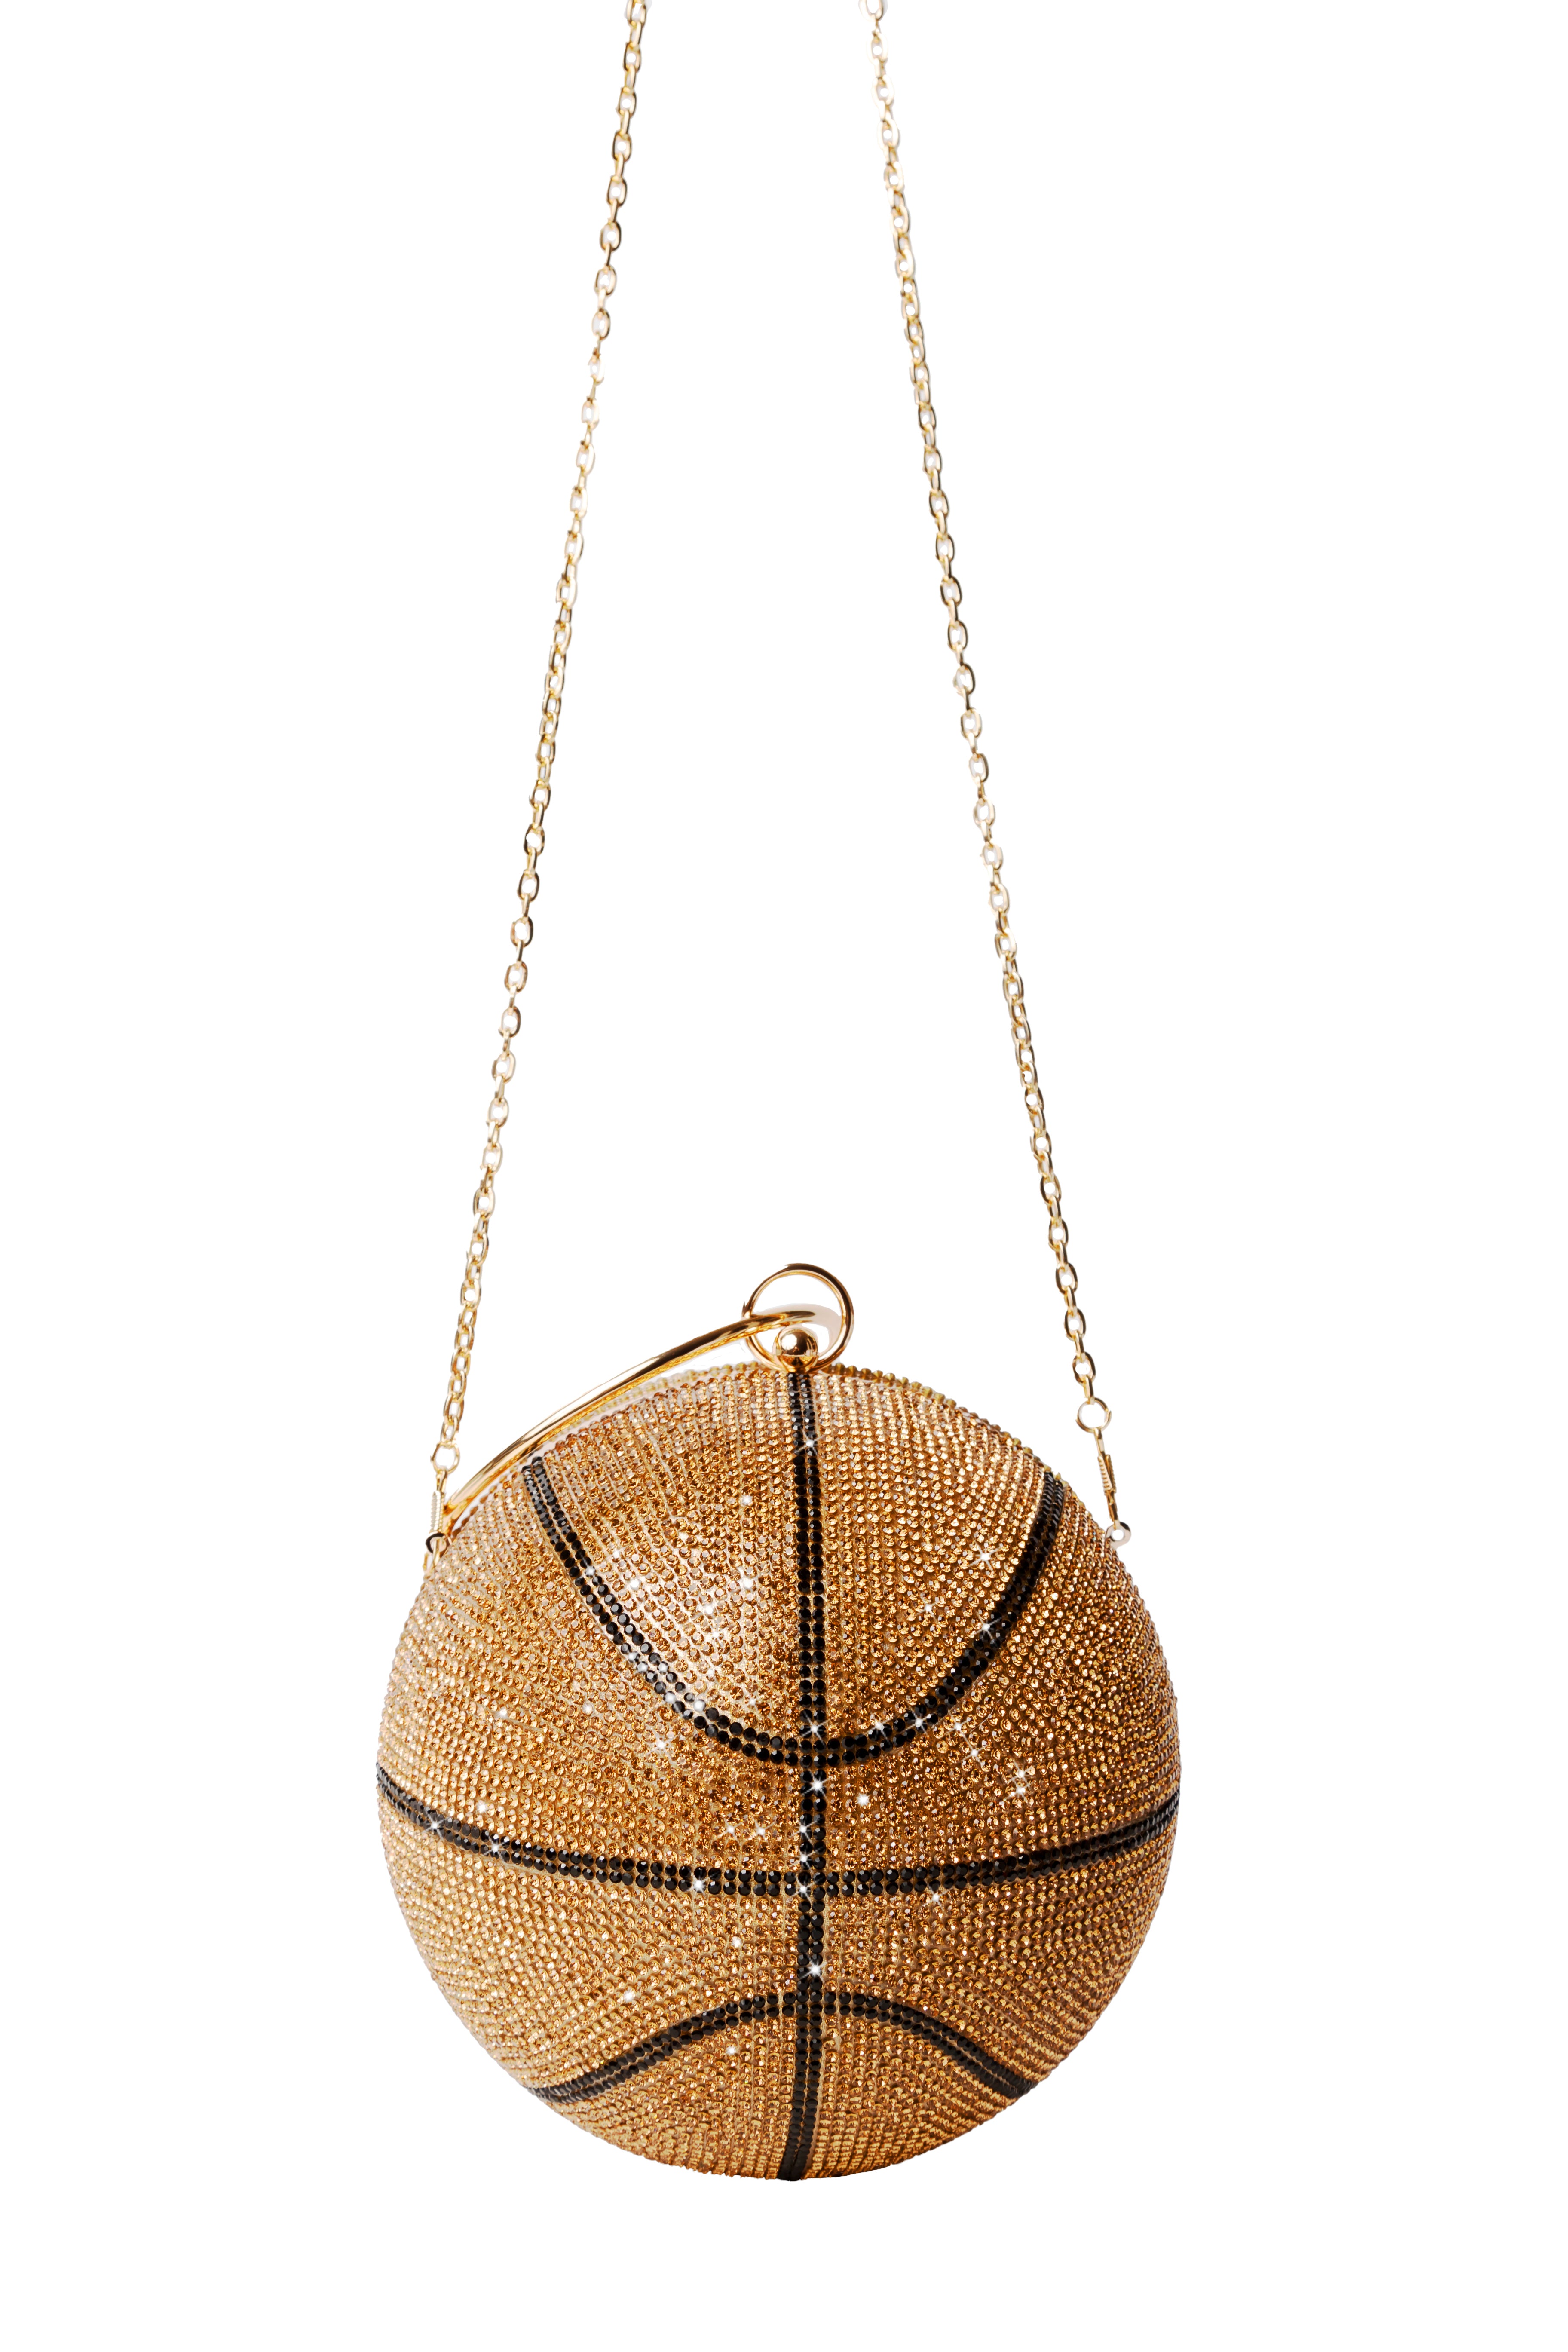 Basketball Shaped Purse | Fun and Cute Mini Bag